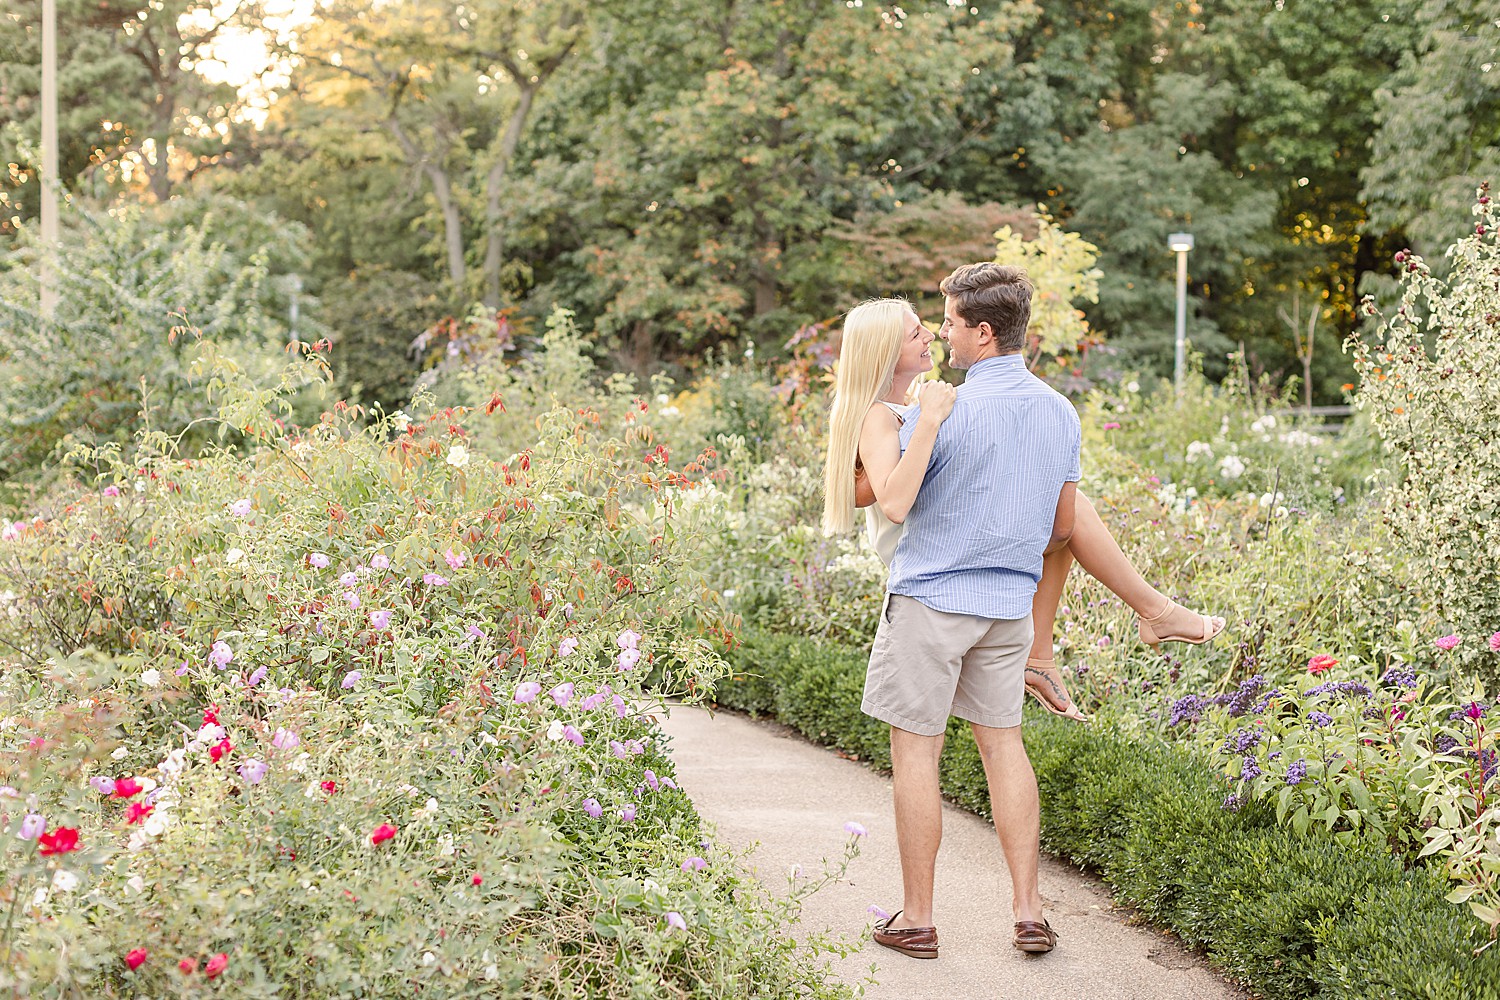 guy lifts up fiance in beautiful garden setting in PA